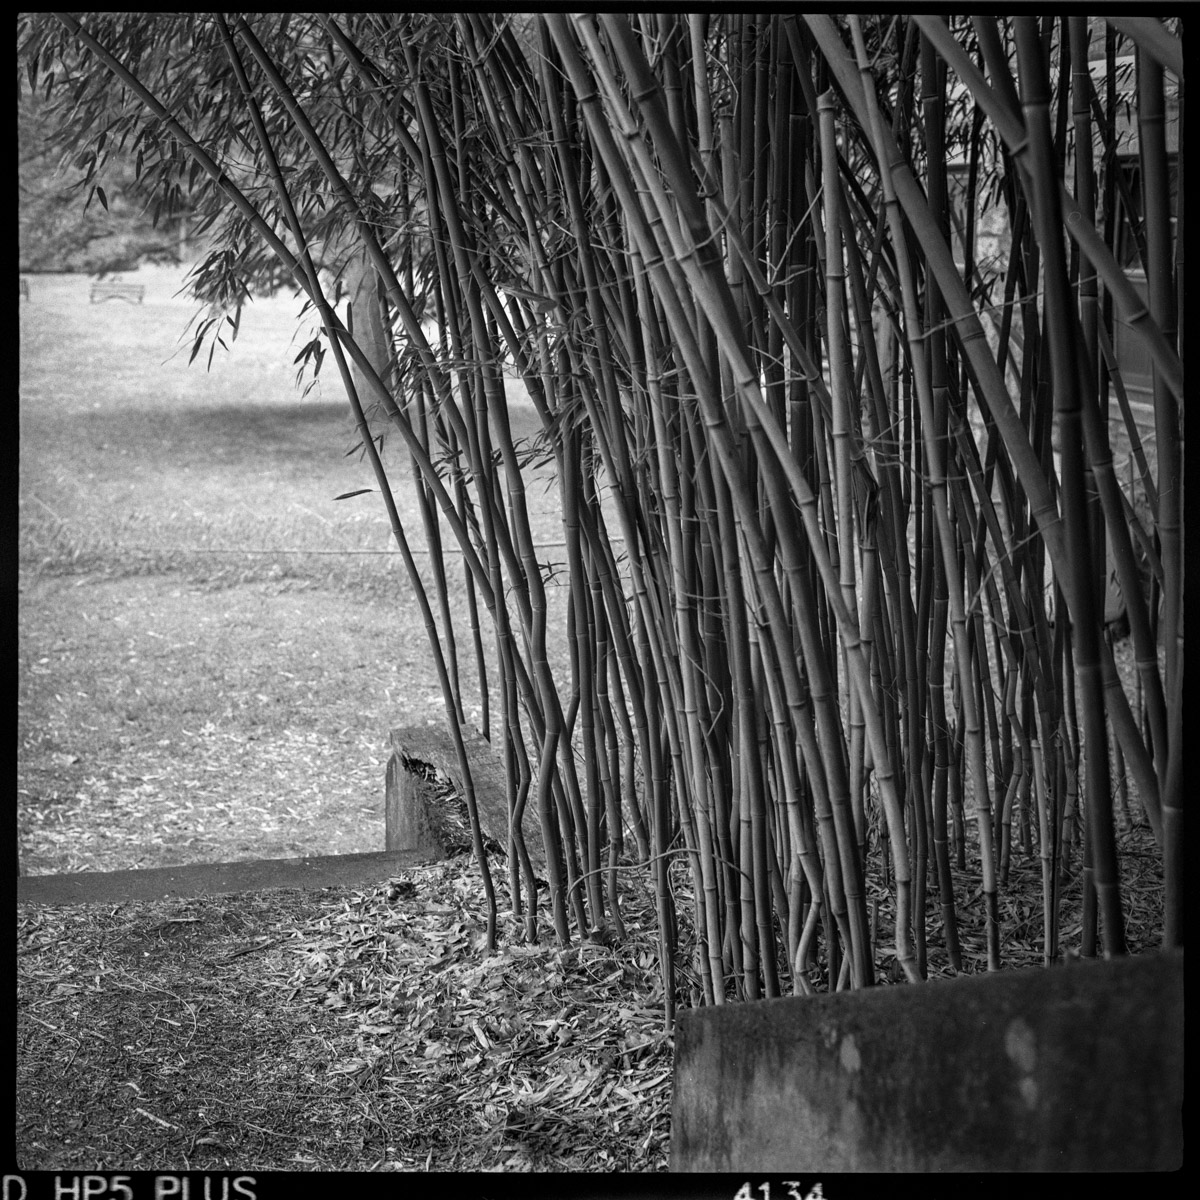 Bamboo garden at the Garrison Institute